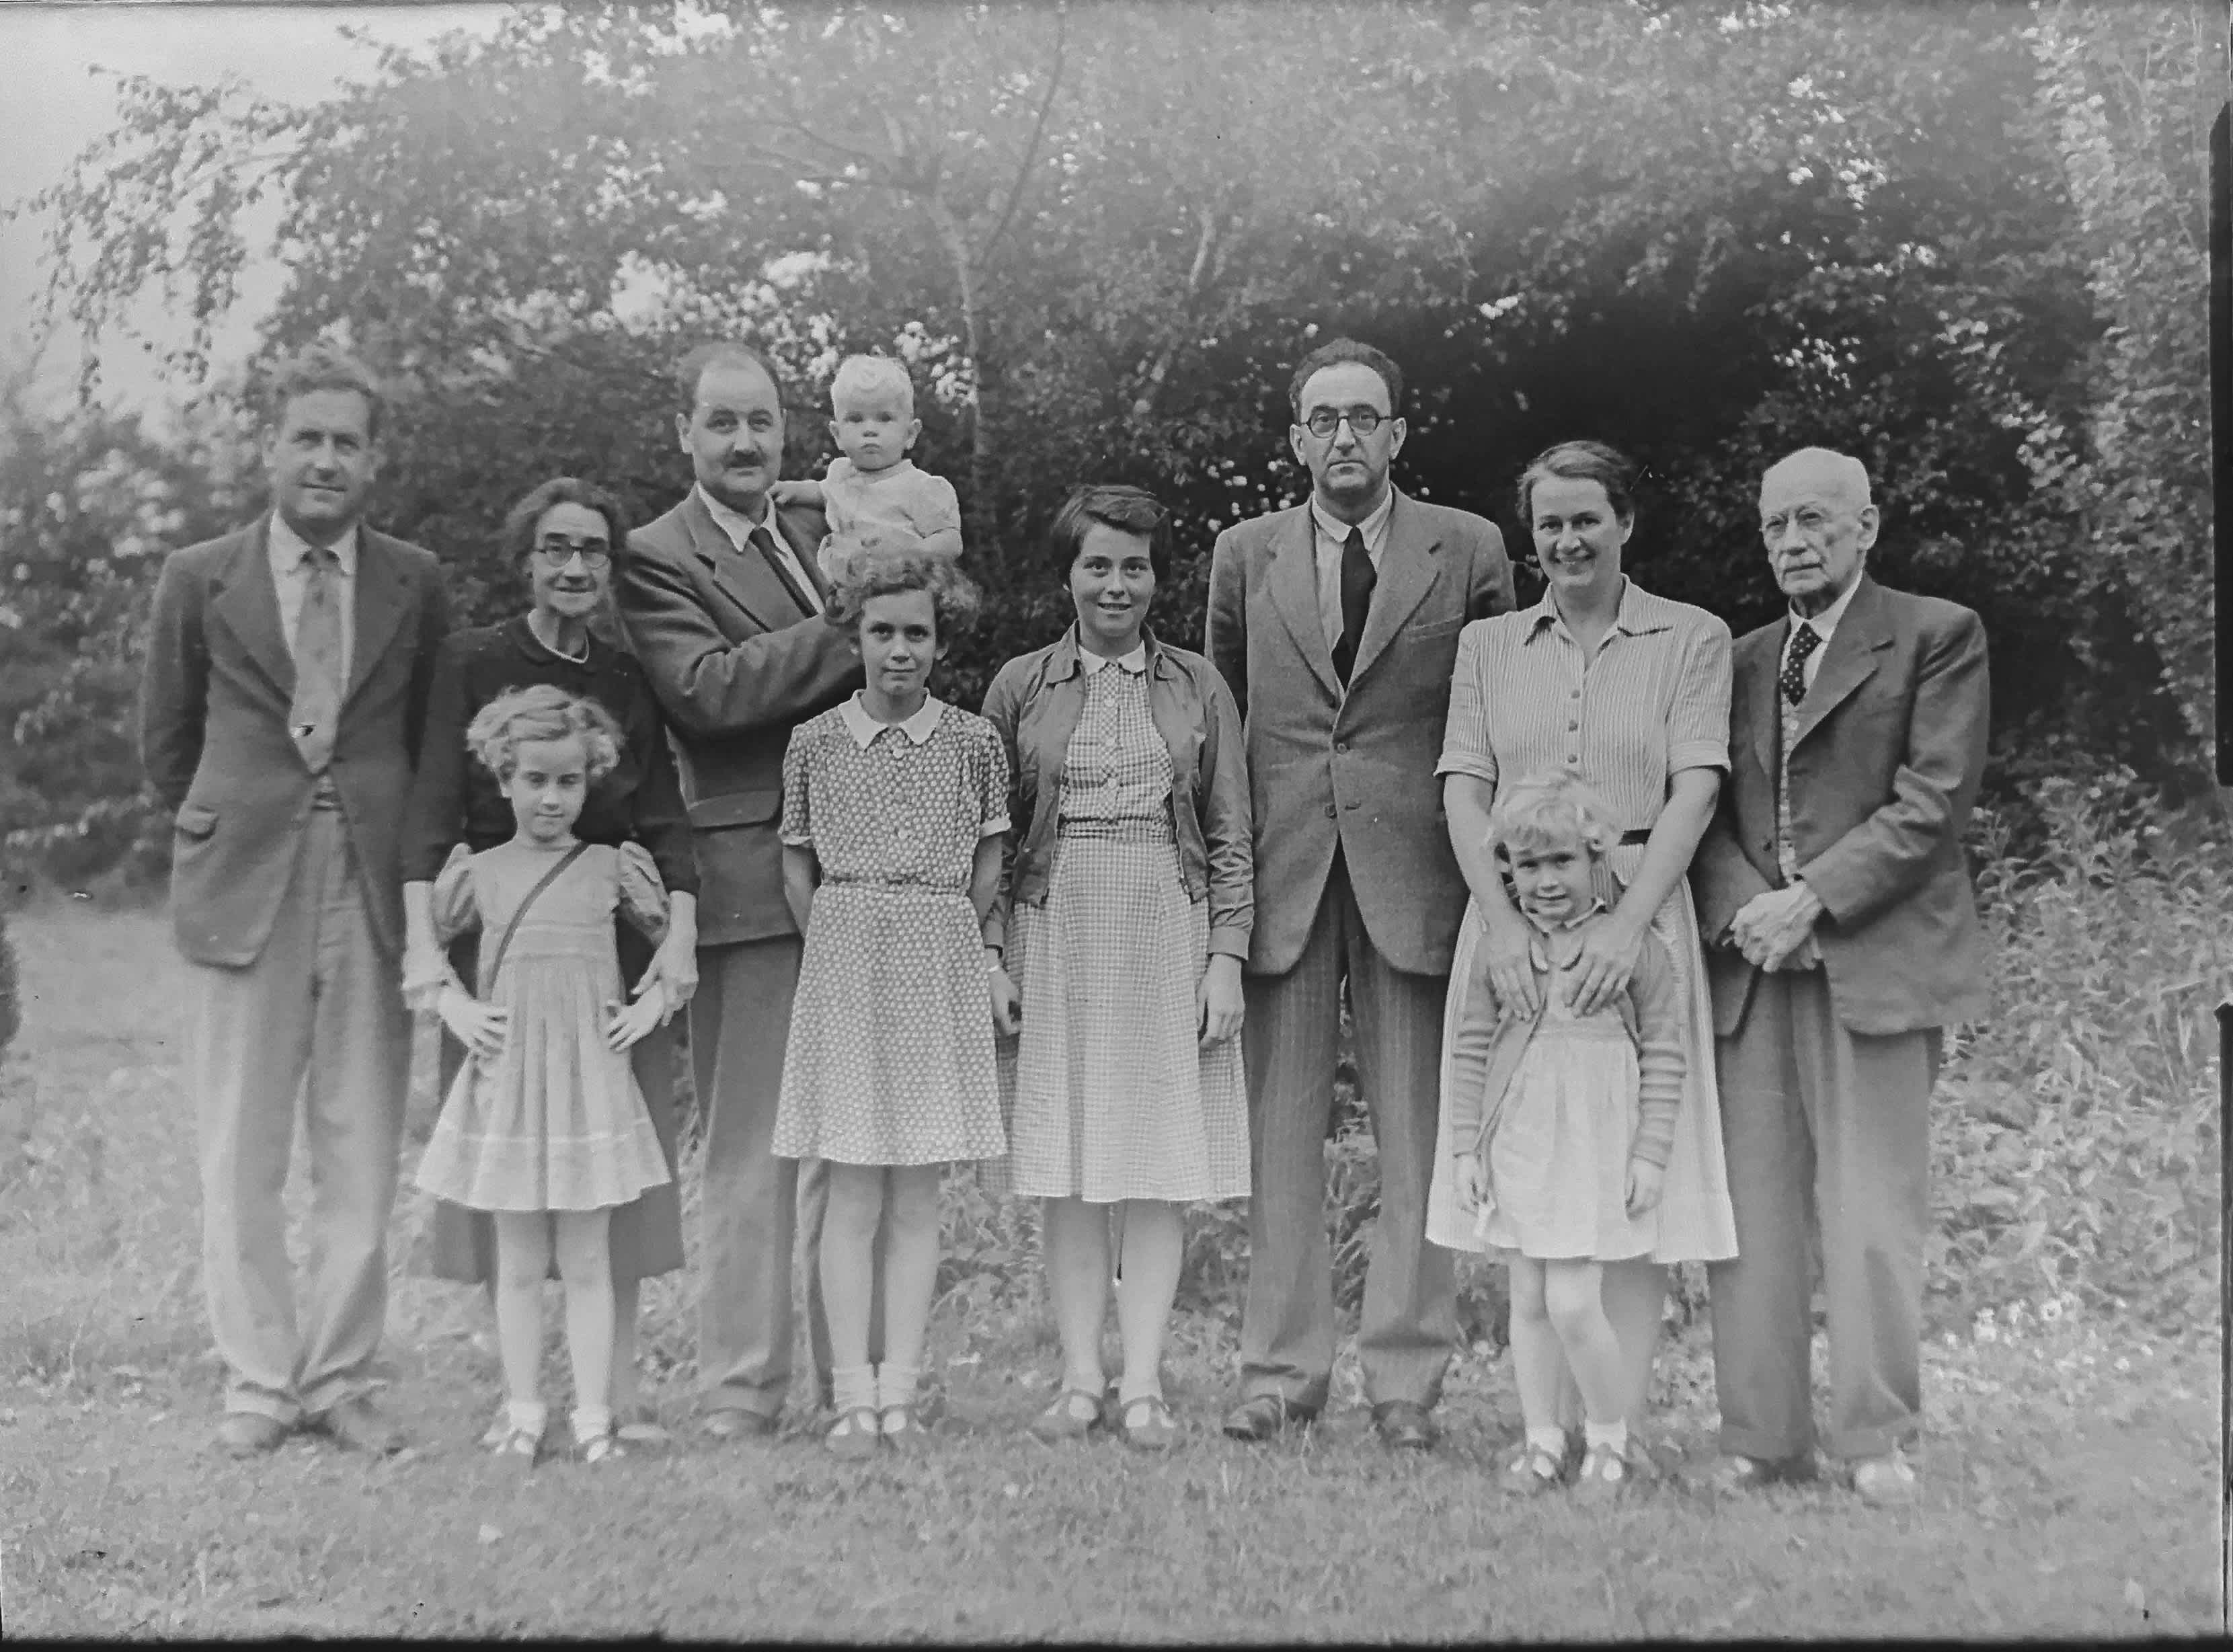 A vintage family photograph. 